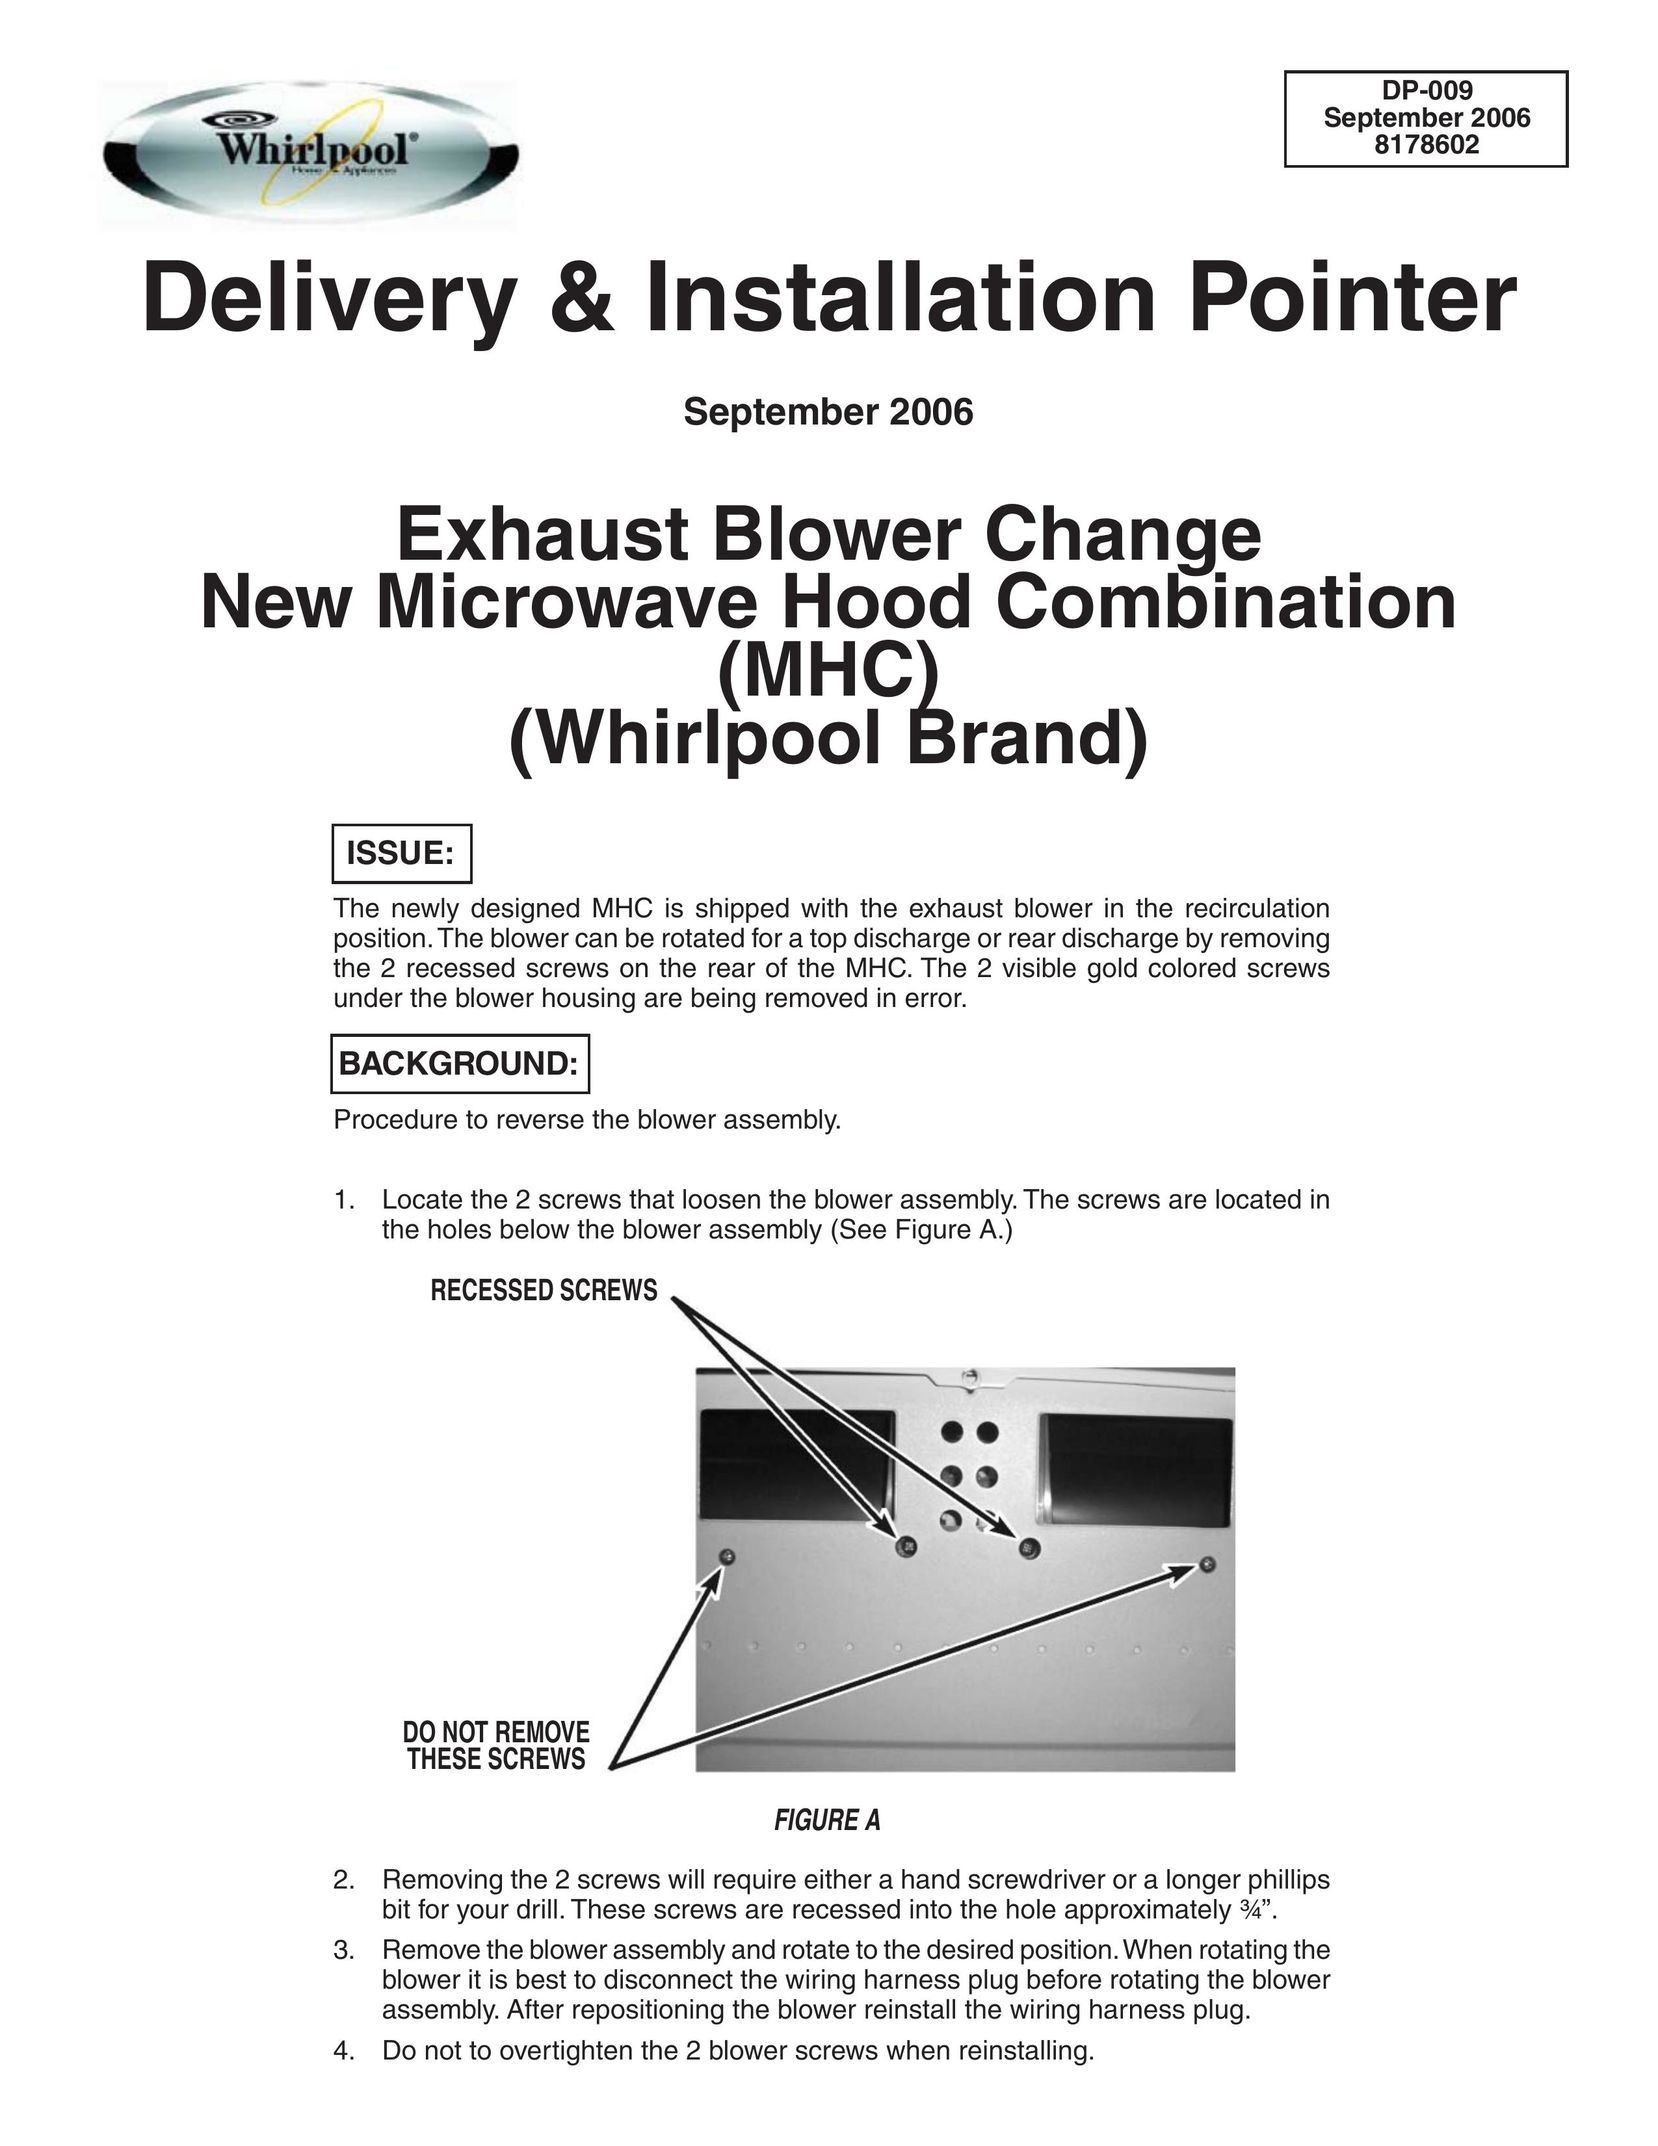 Whirlpool DP-009 Microwave Oven User Manual